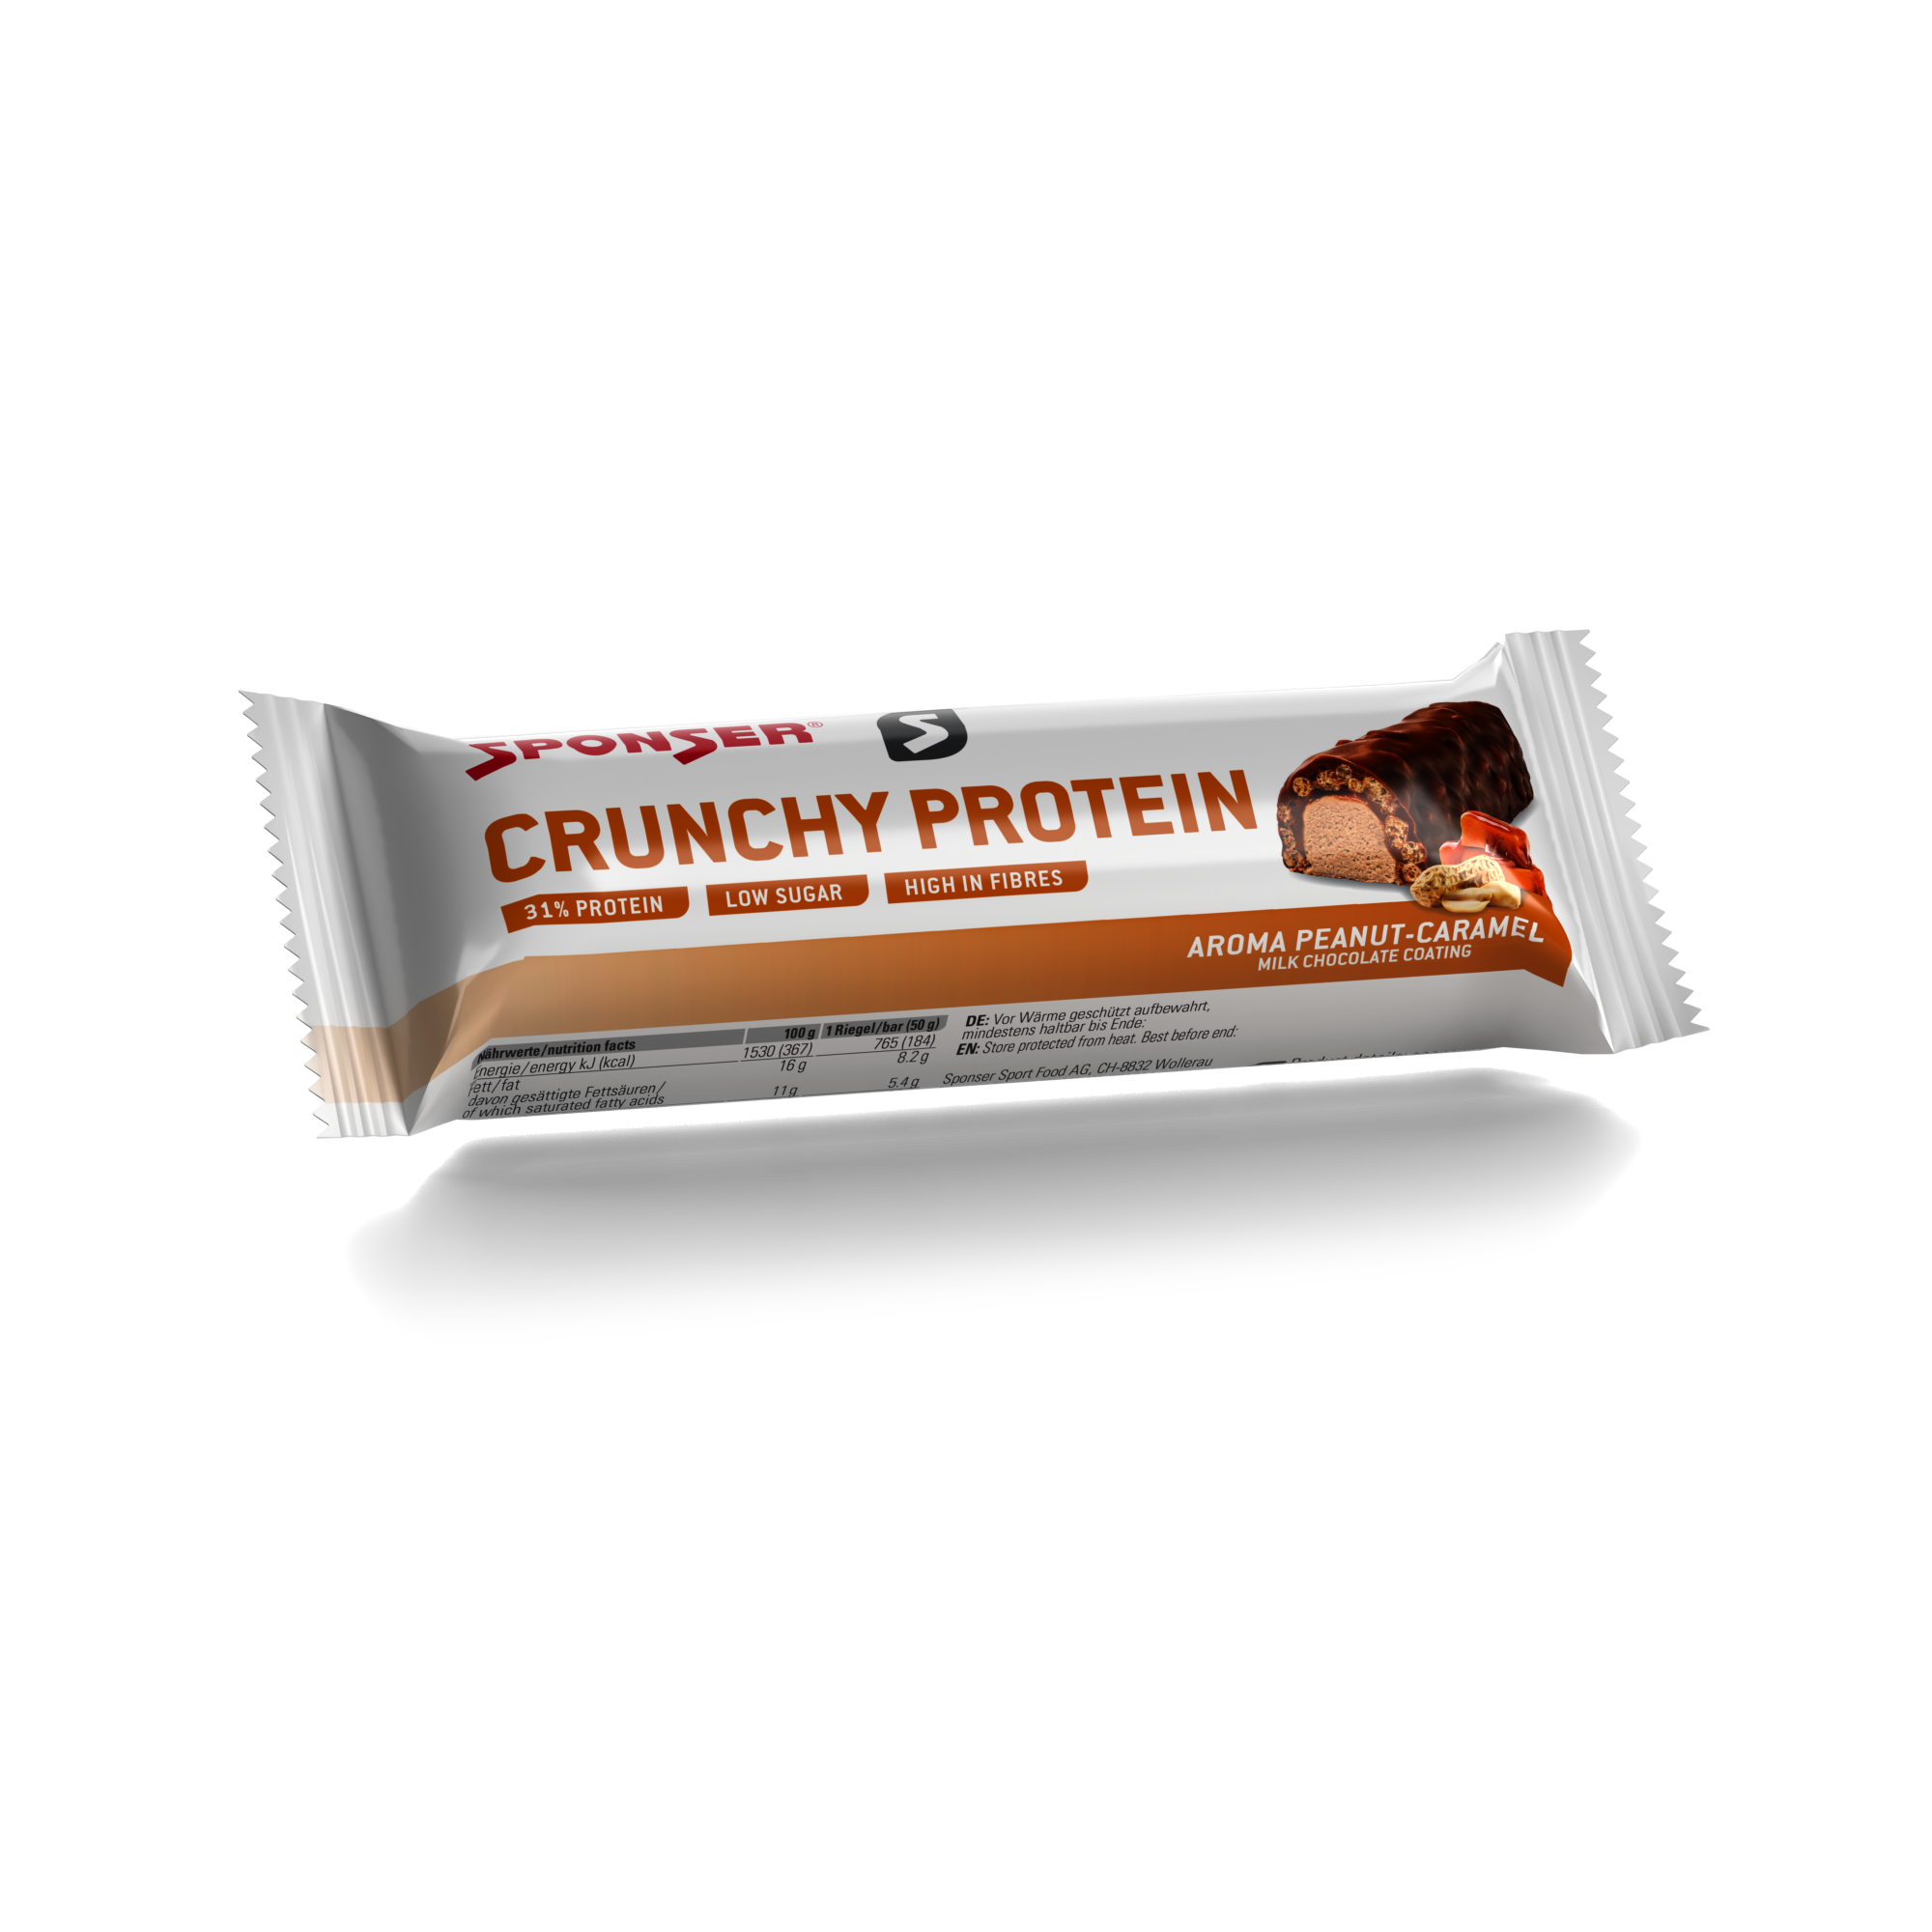 Sponser Crunchy Protein Peanut-Caramel